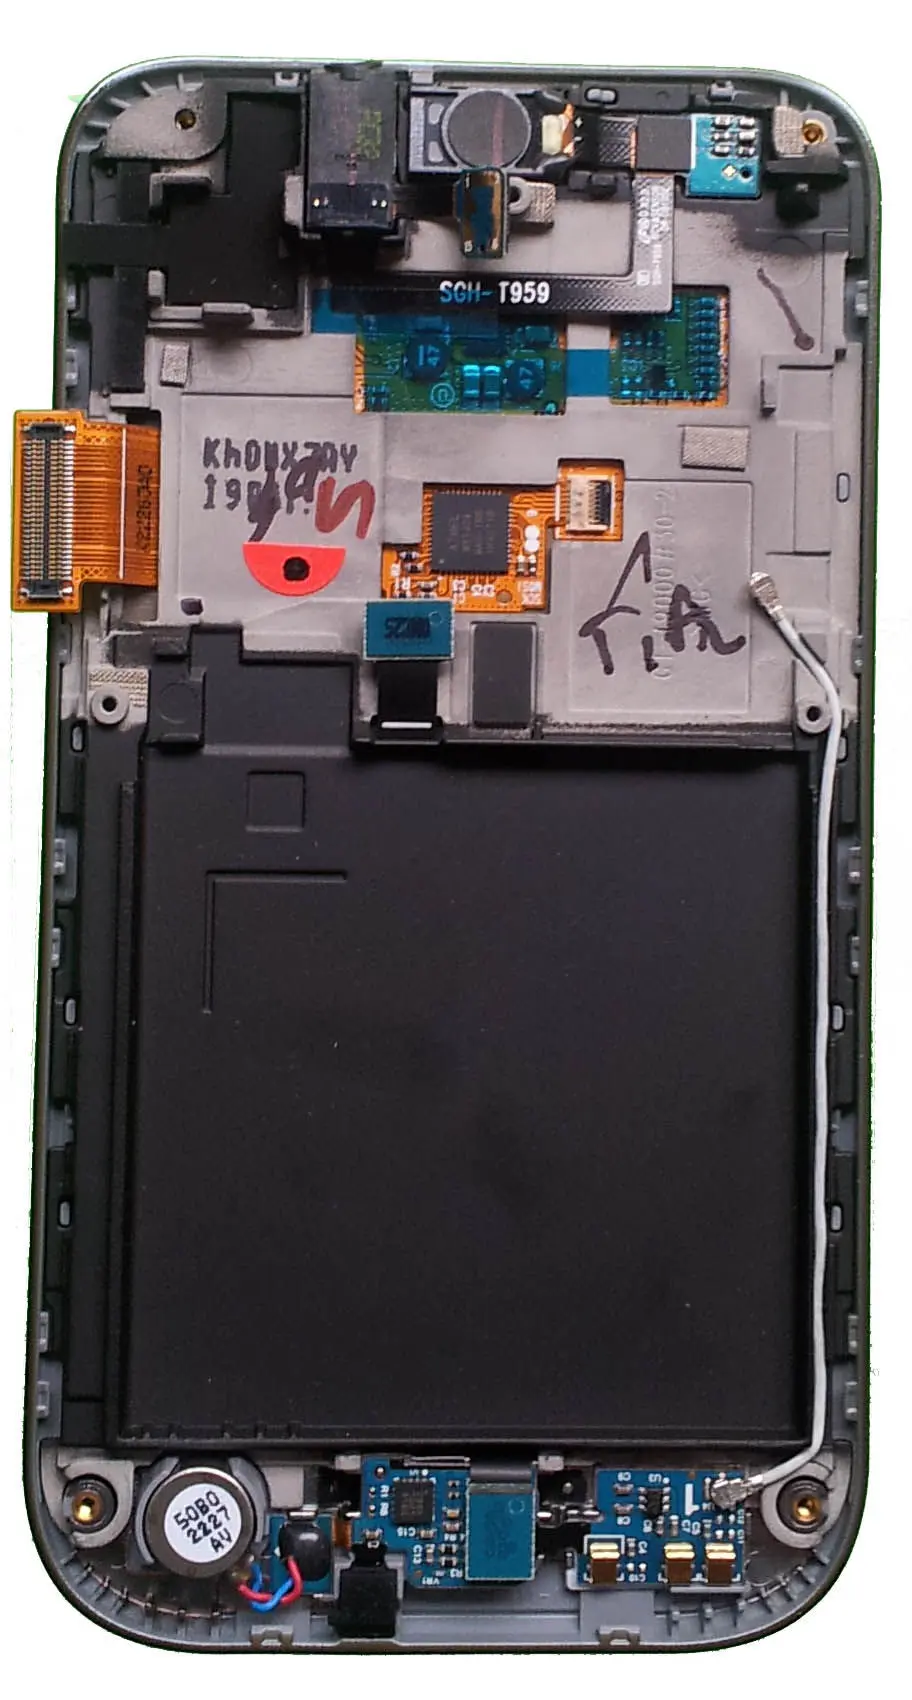 Samsung Galaxy S Plus GT-i9001 Display Unit Cover (Original) | Mobile Parts